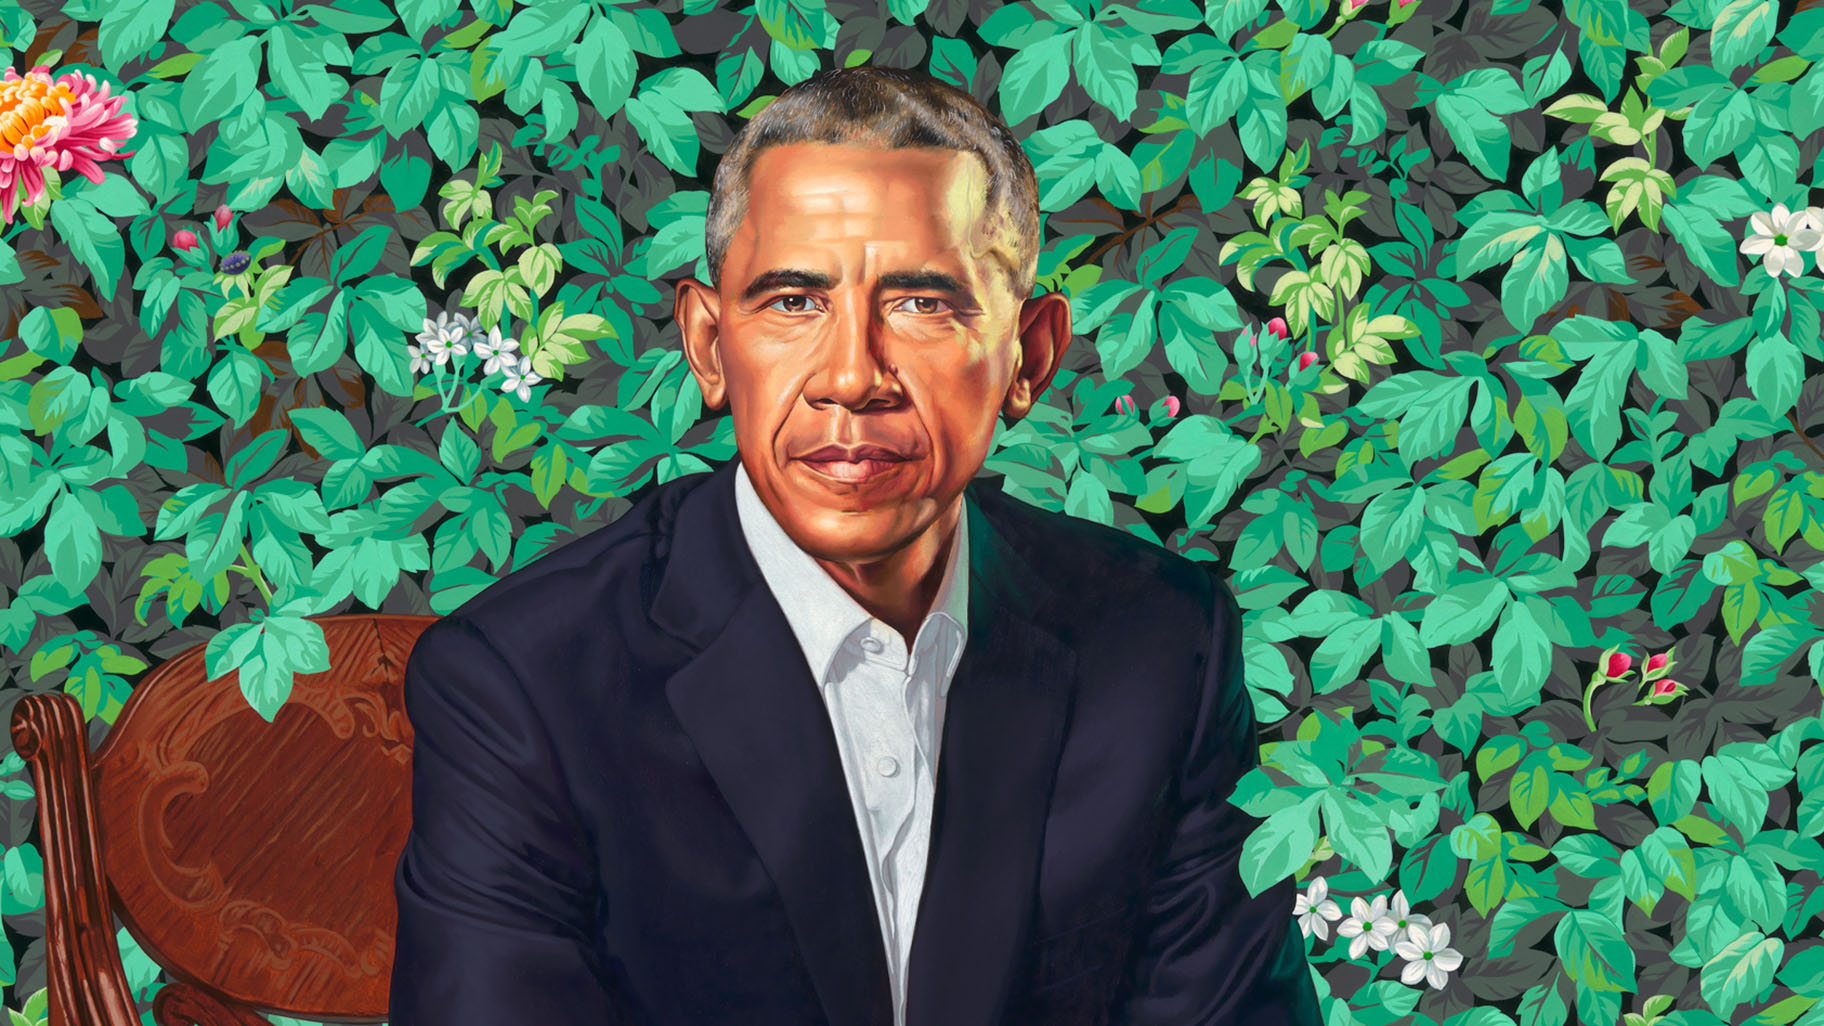 Obama Portraits Launch 5City Tour at Chicago’s Art Institute Chicago